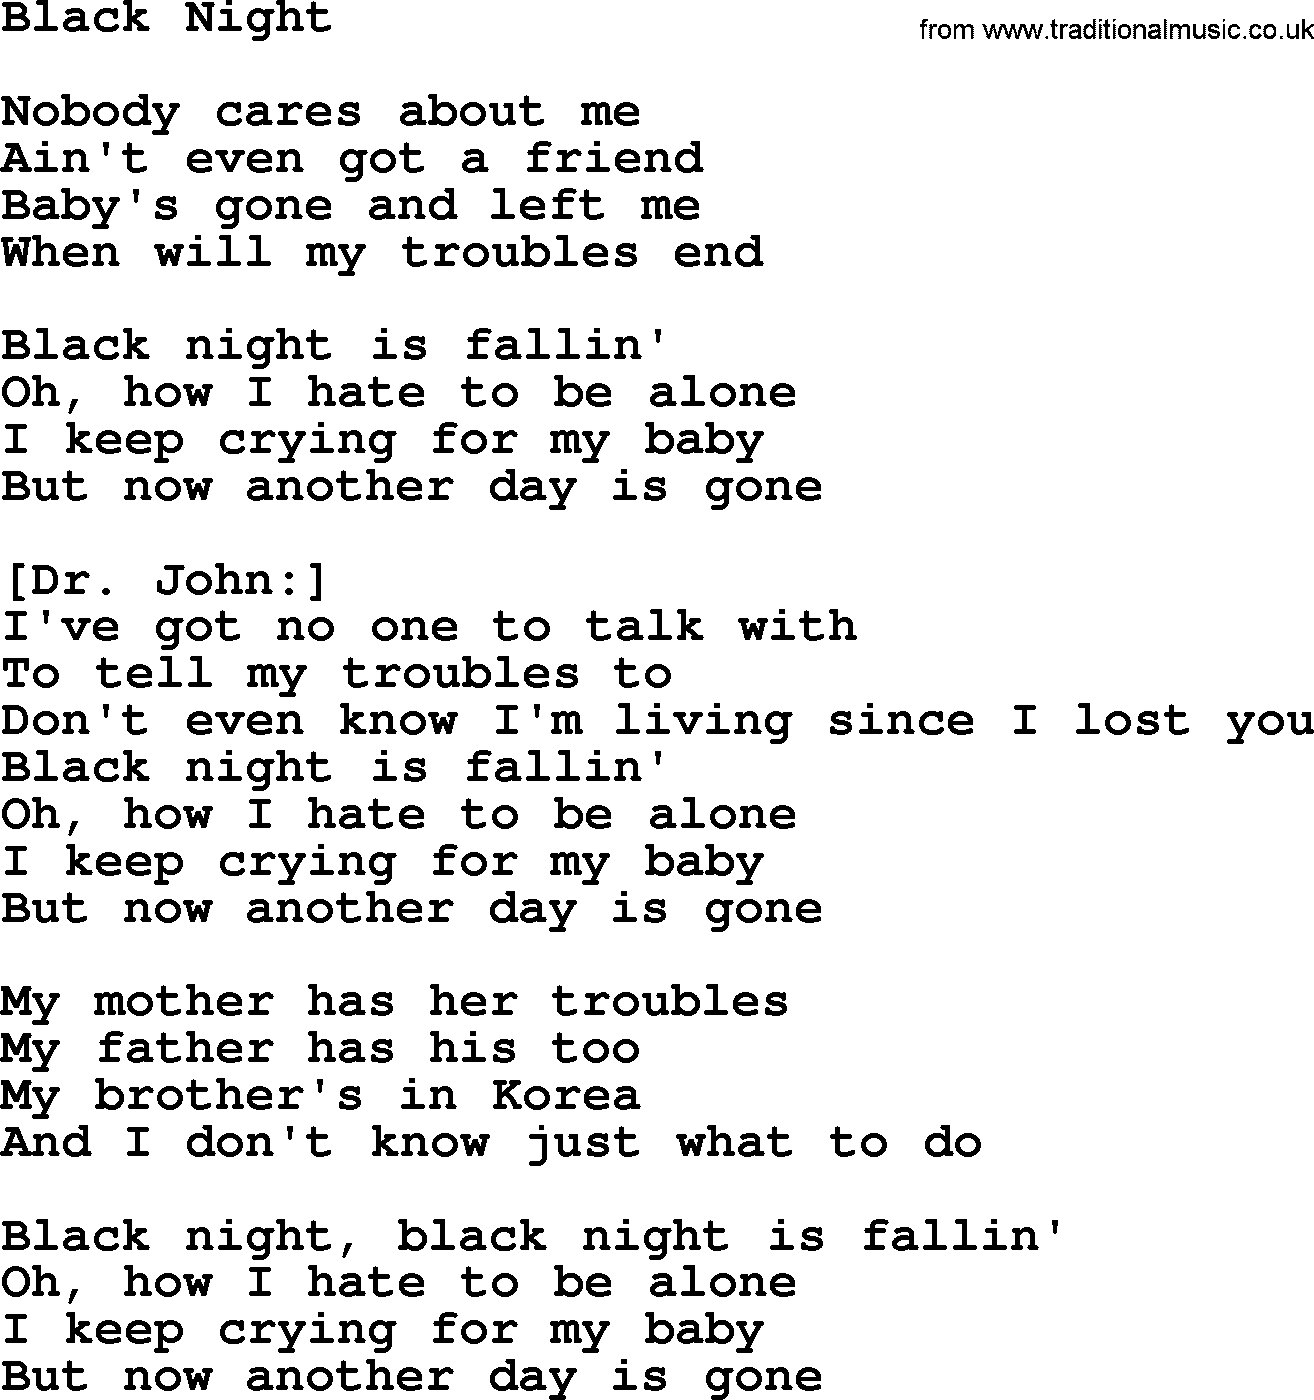 Willie Nelson song: Black Night lyrics